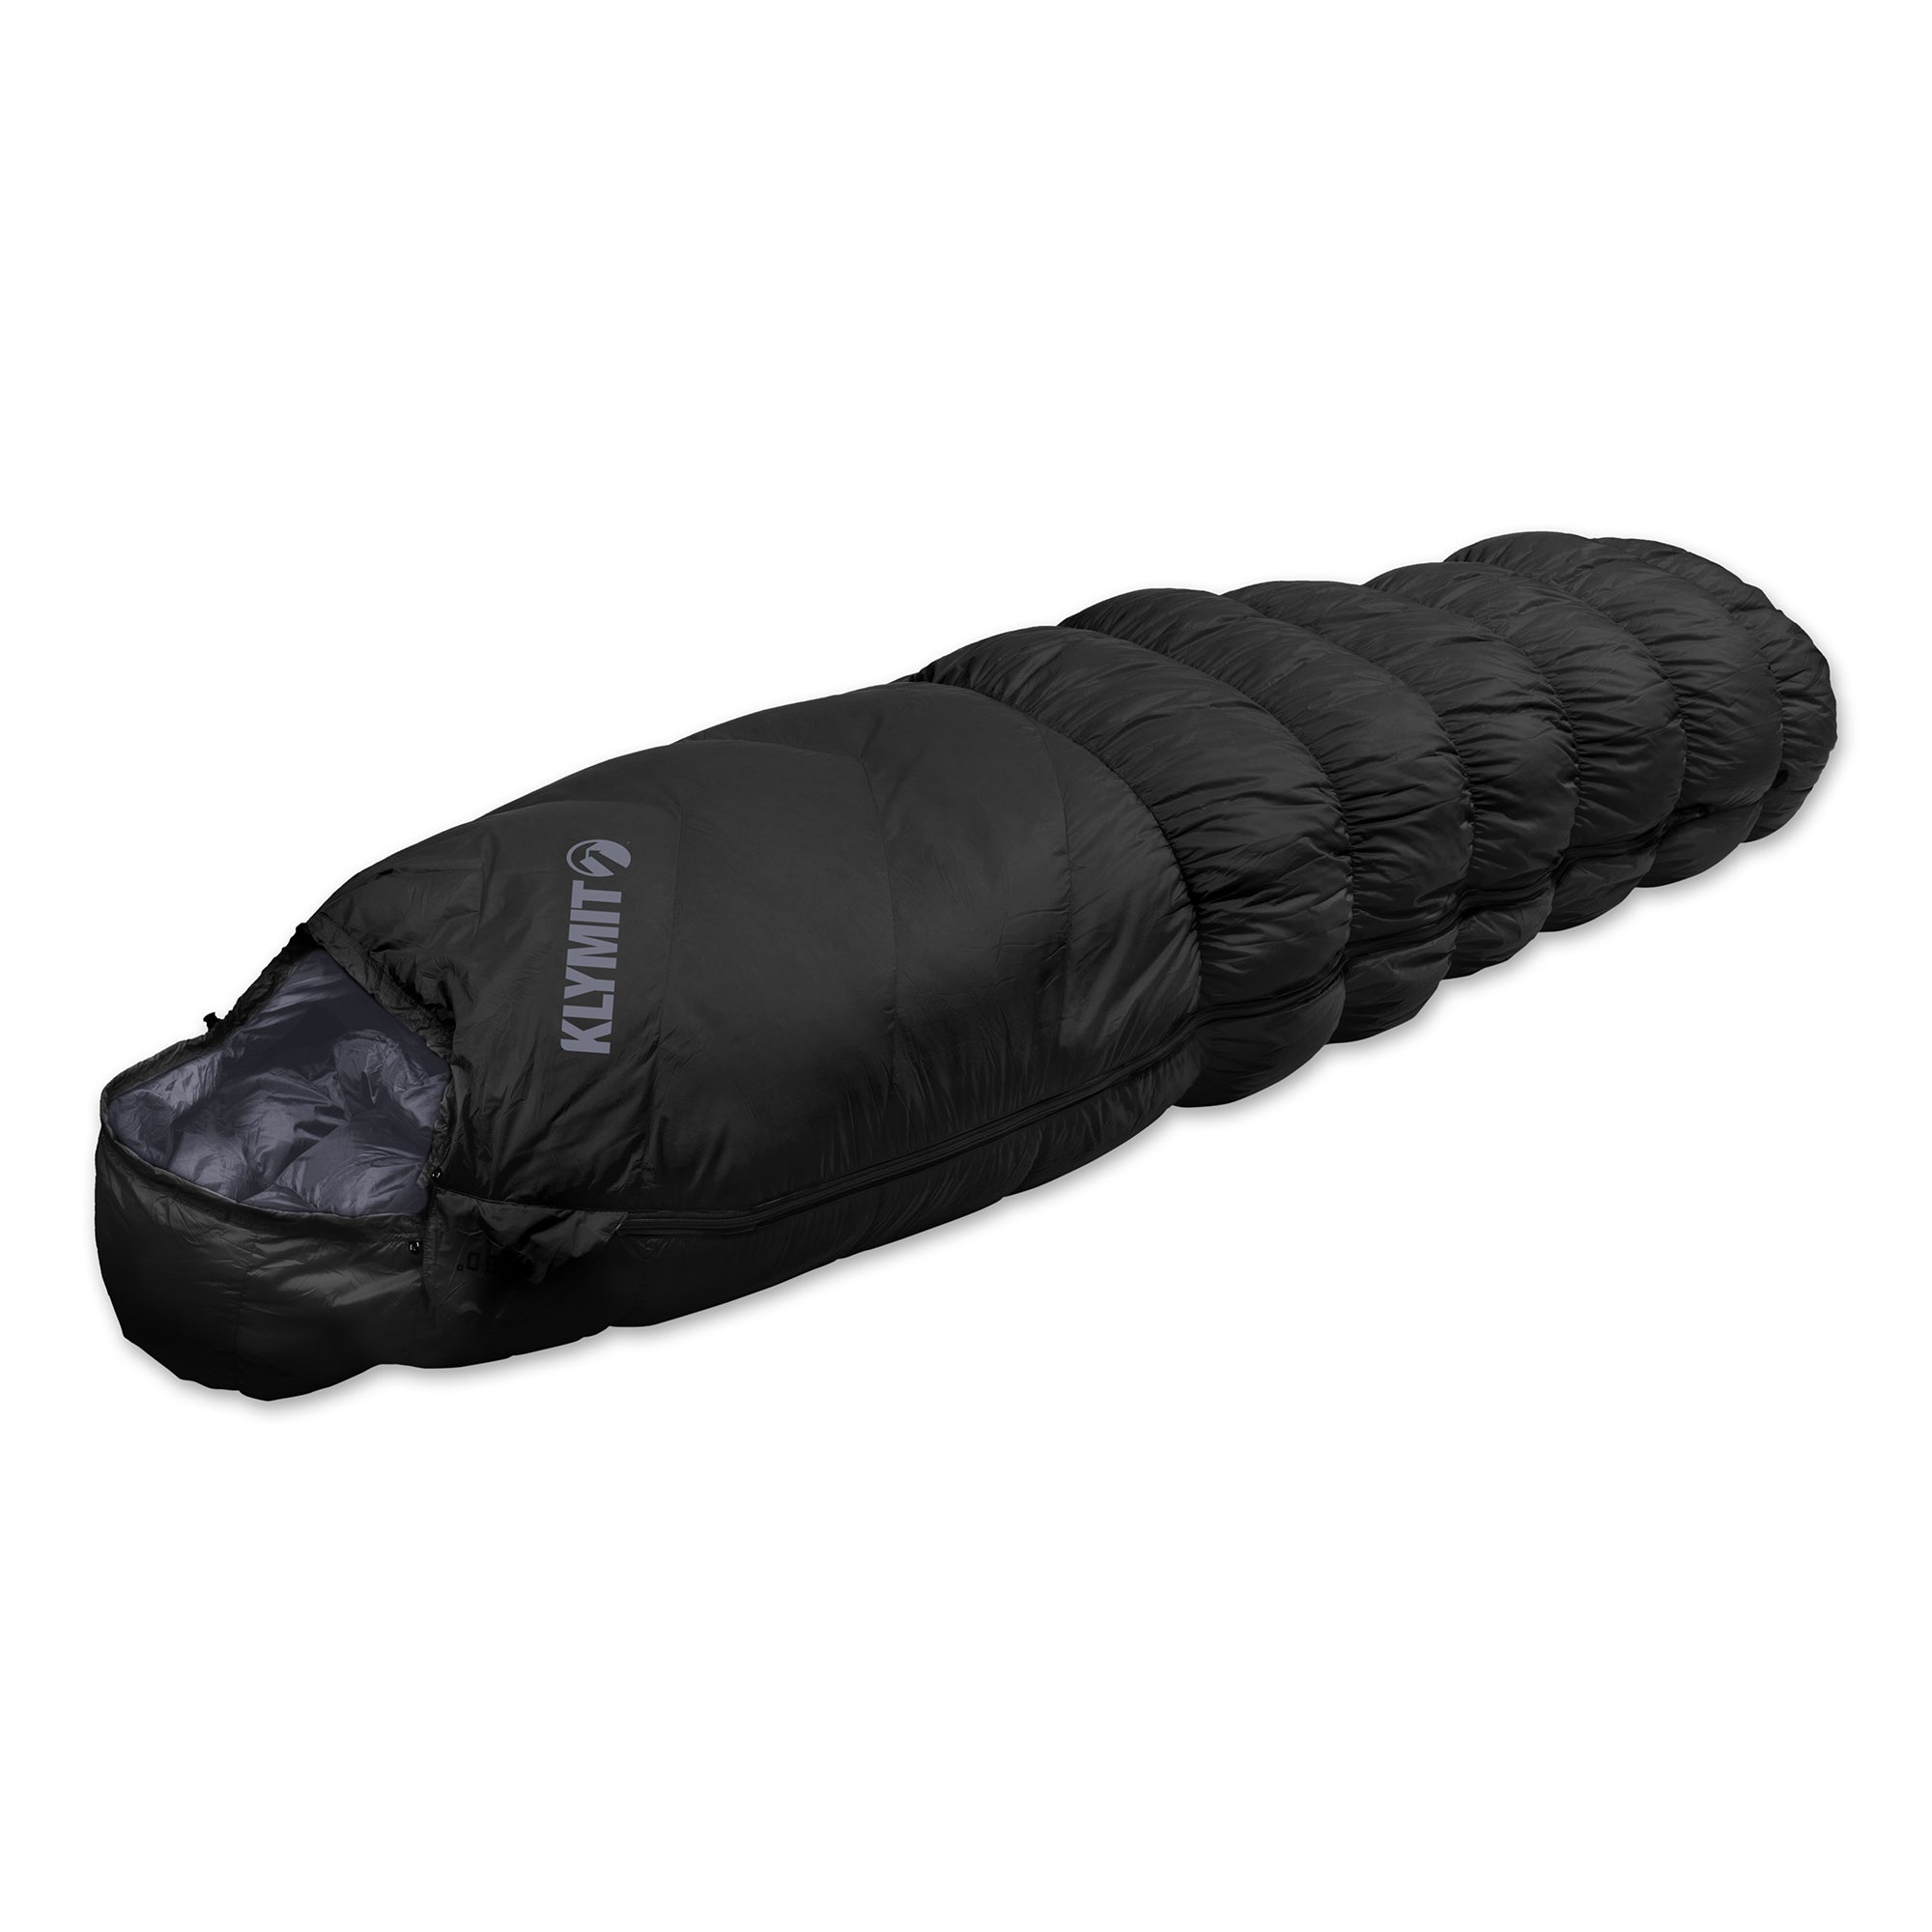 0 Degree Full-Synthetic Sleeping Bag, Black, Side Angle